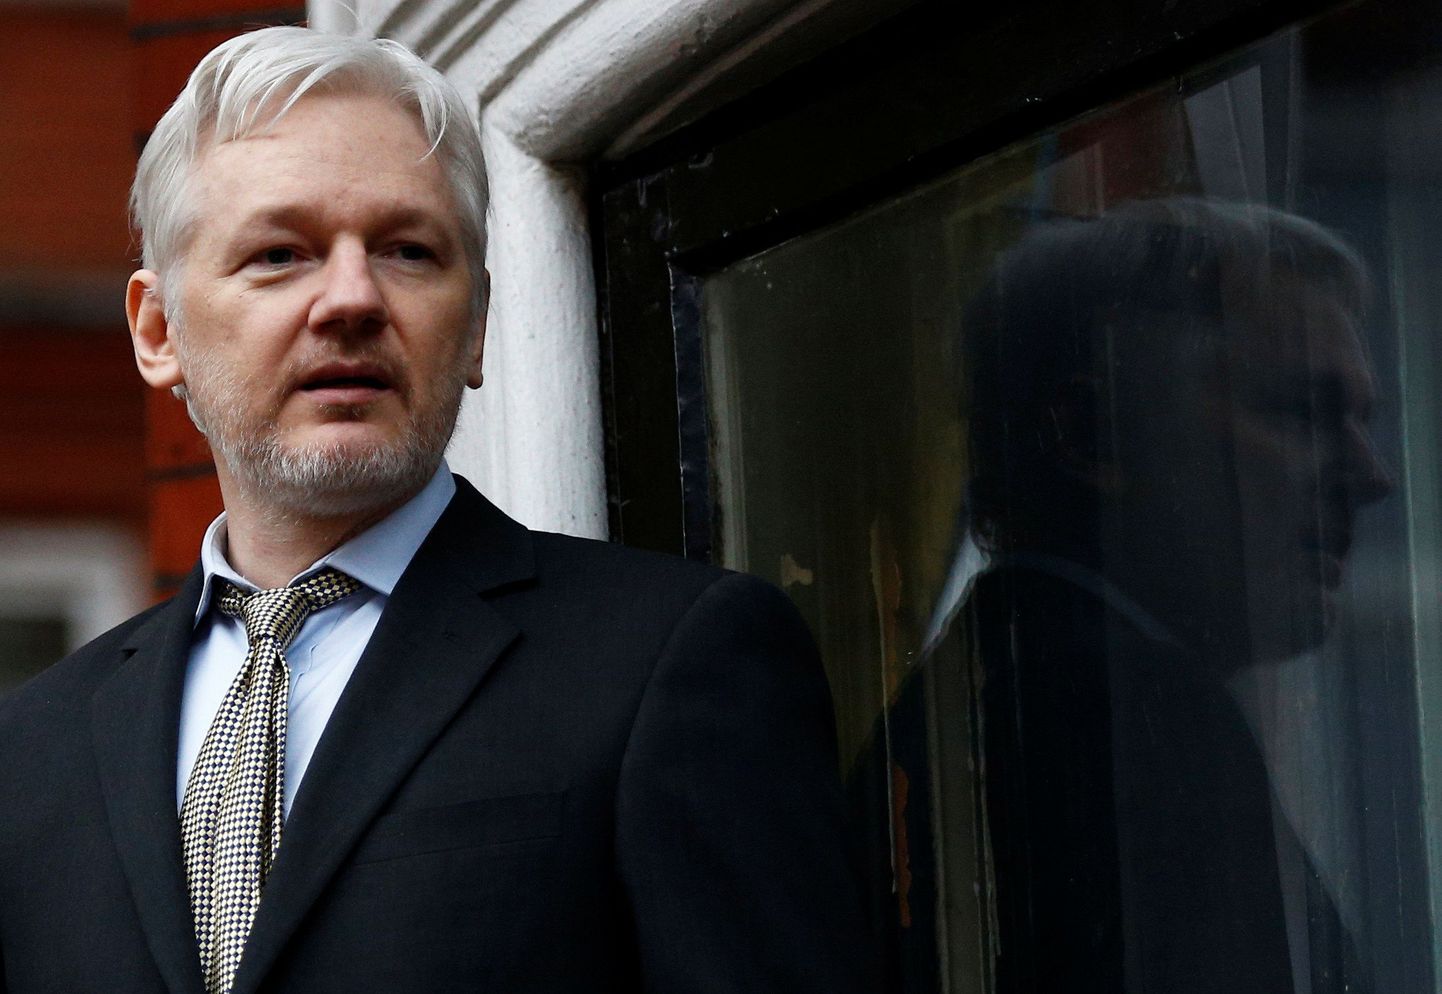 WikiLeaksile alusepanija Julian Assange.